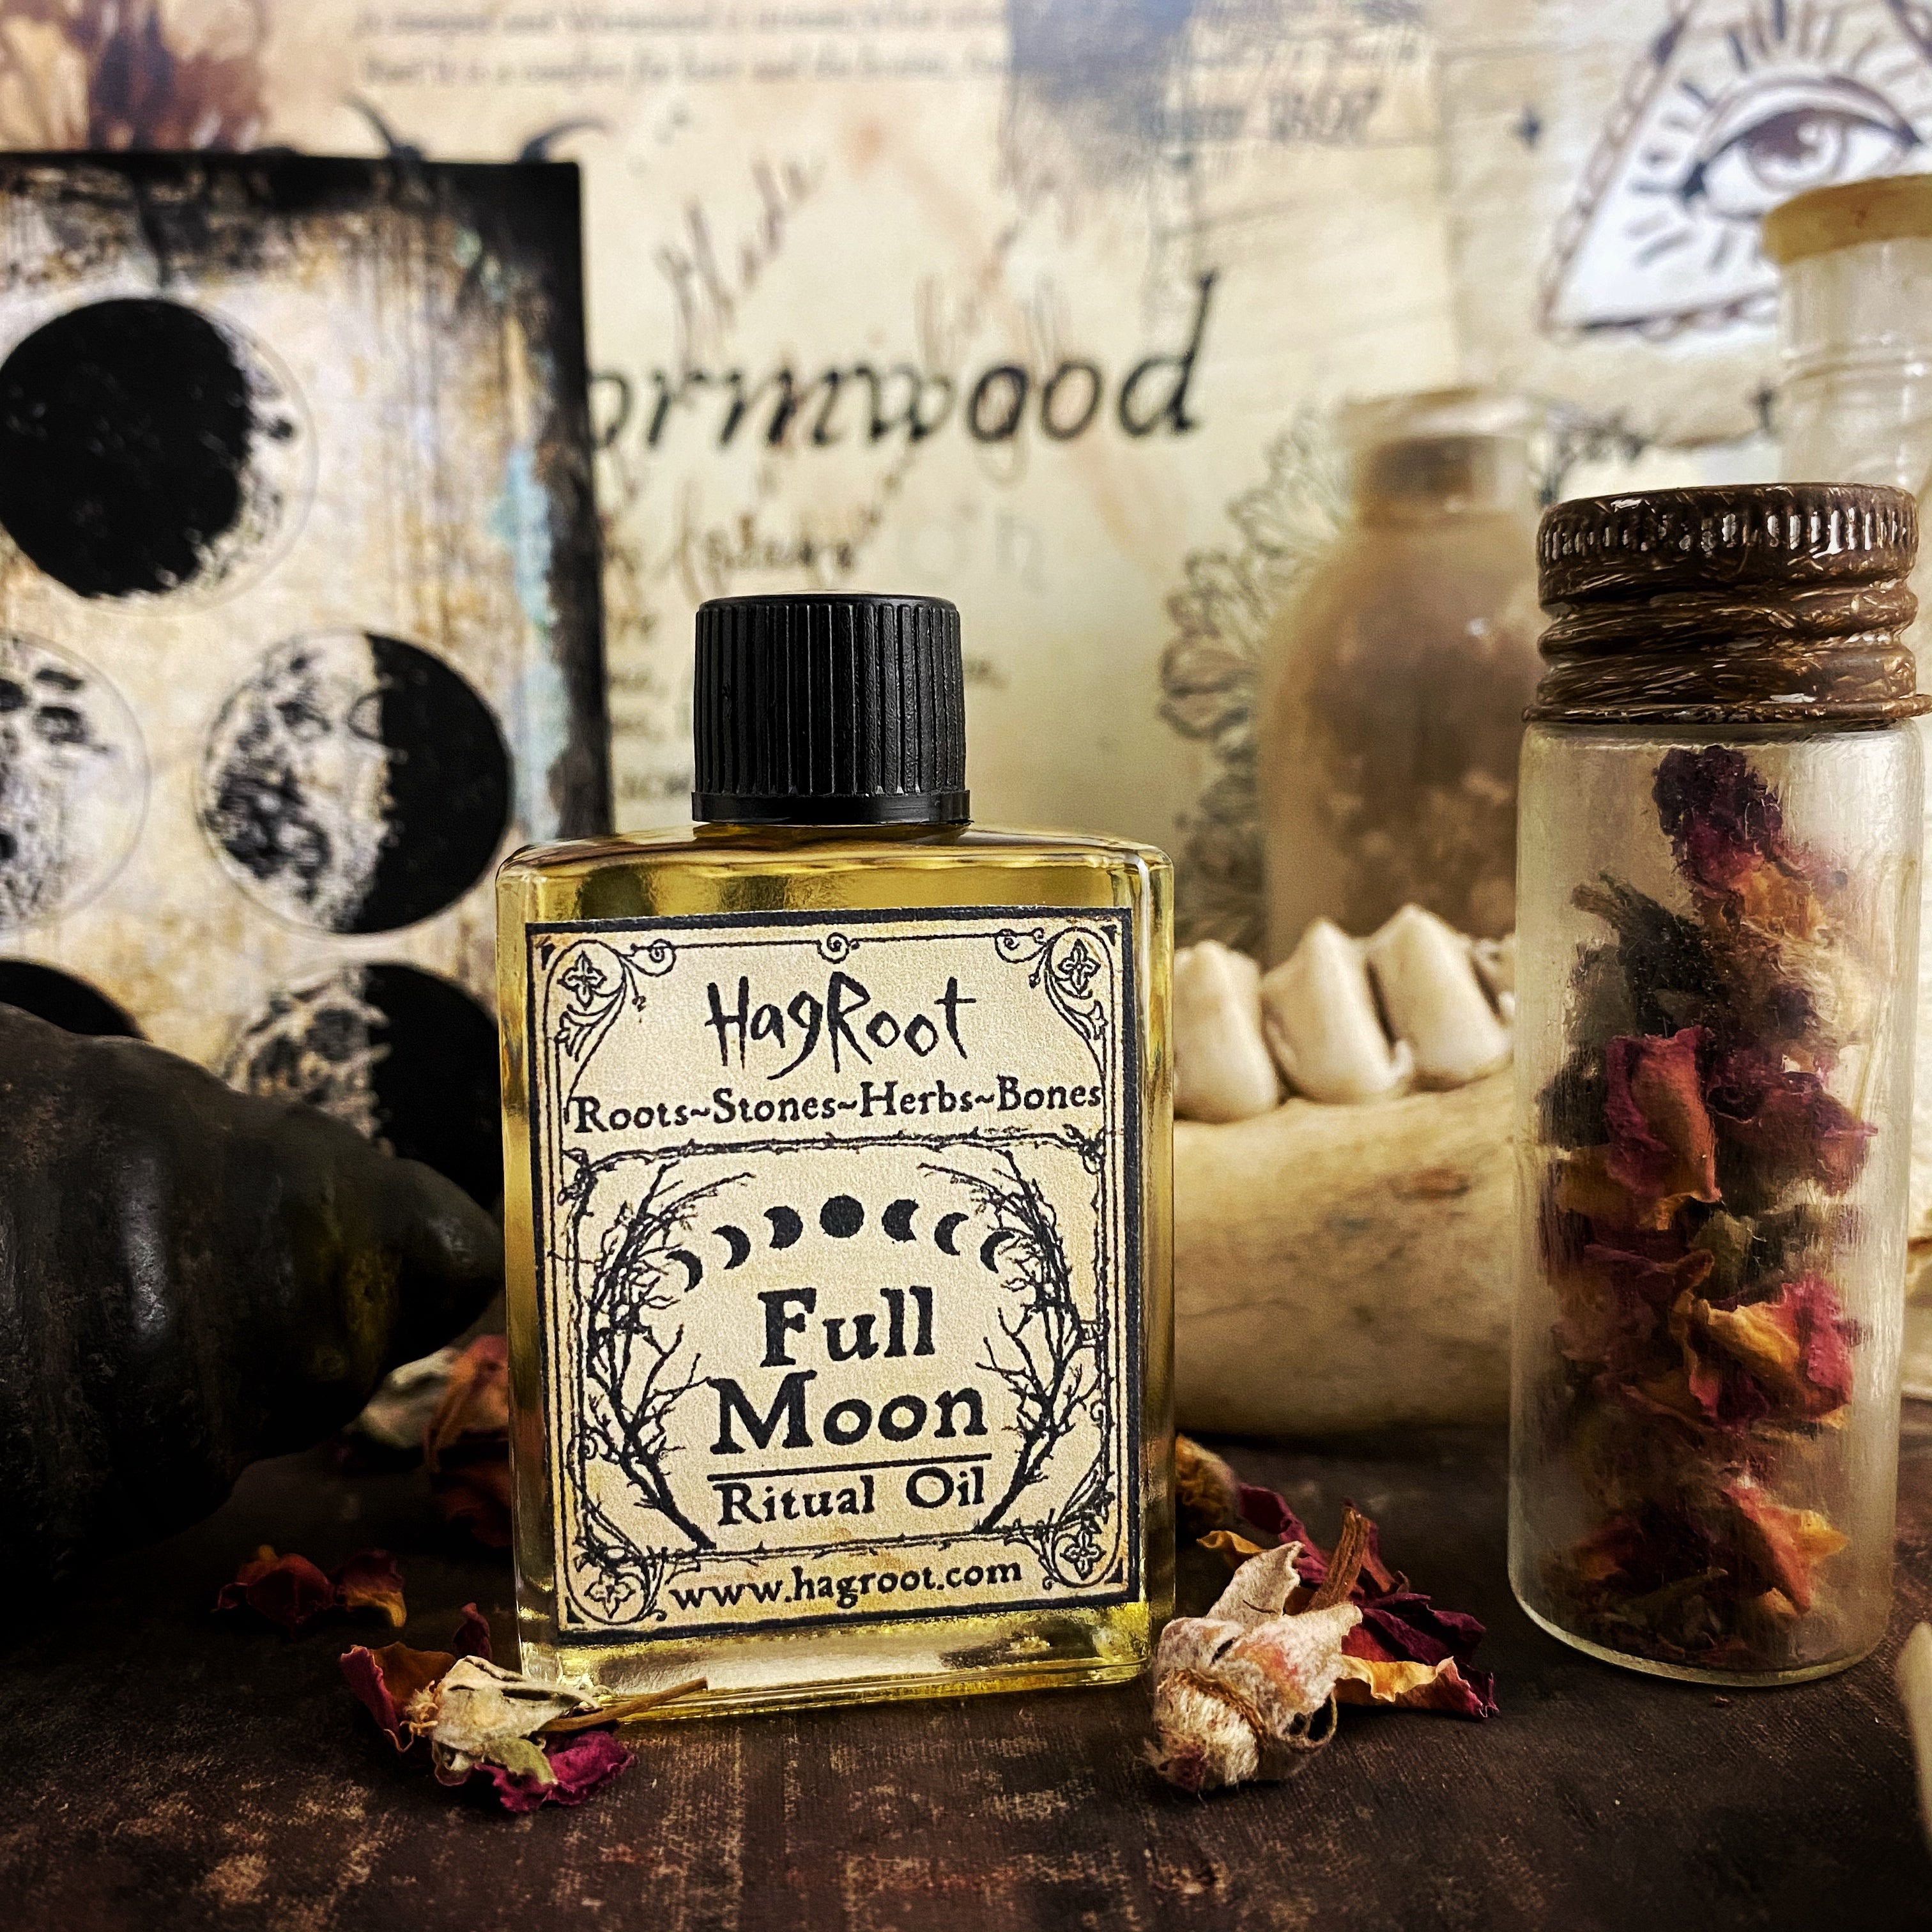 Full Moon Ritual Oil, Anointing Oil, Perfume Oil